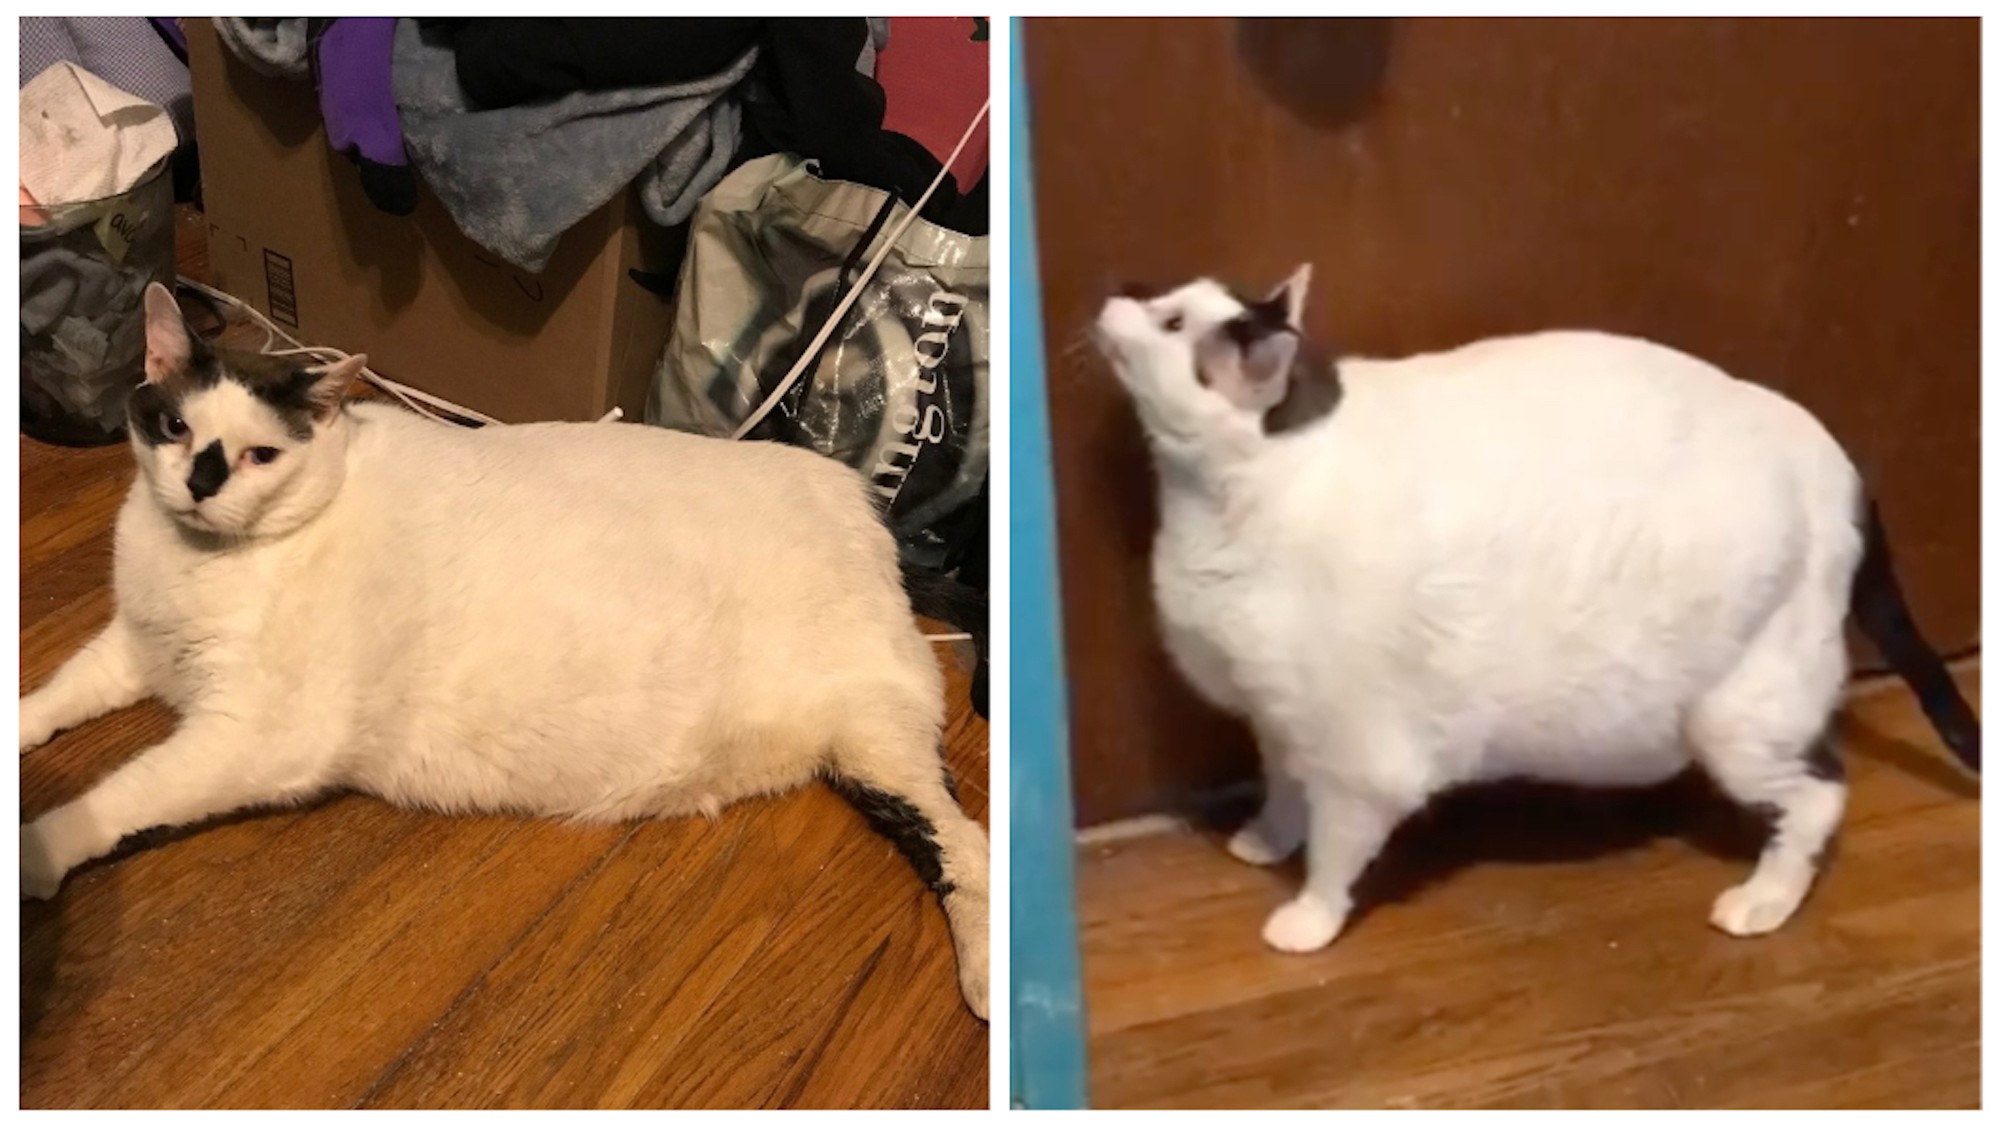 41-Pound Cat Needs a Home